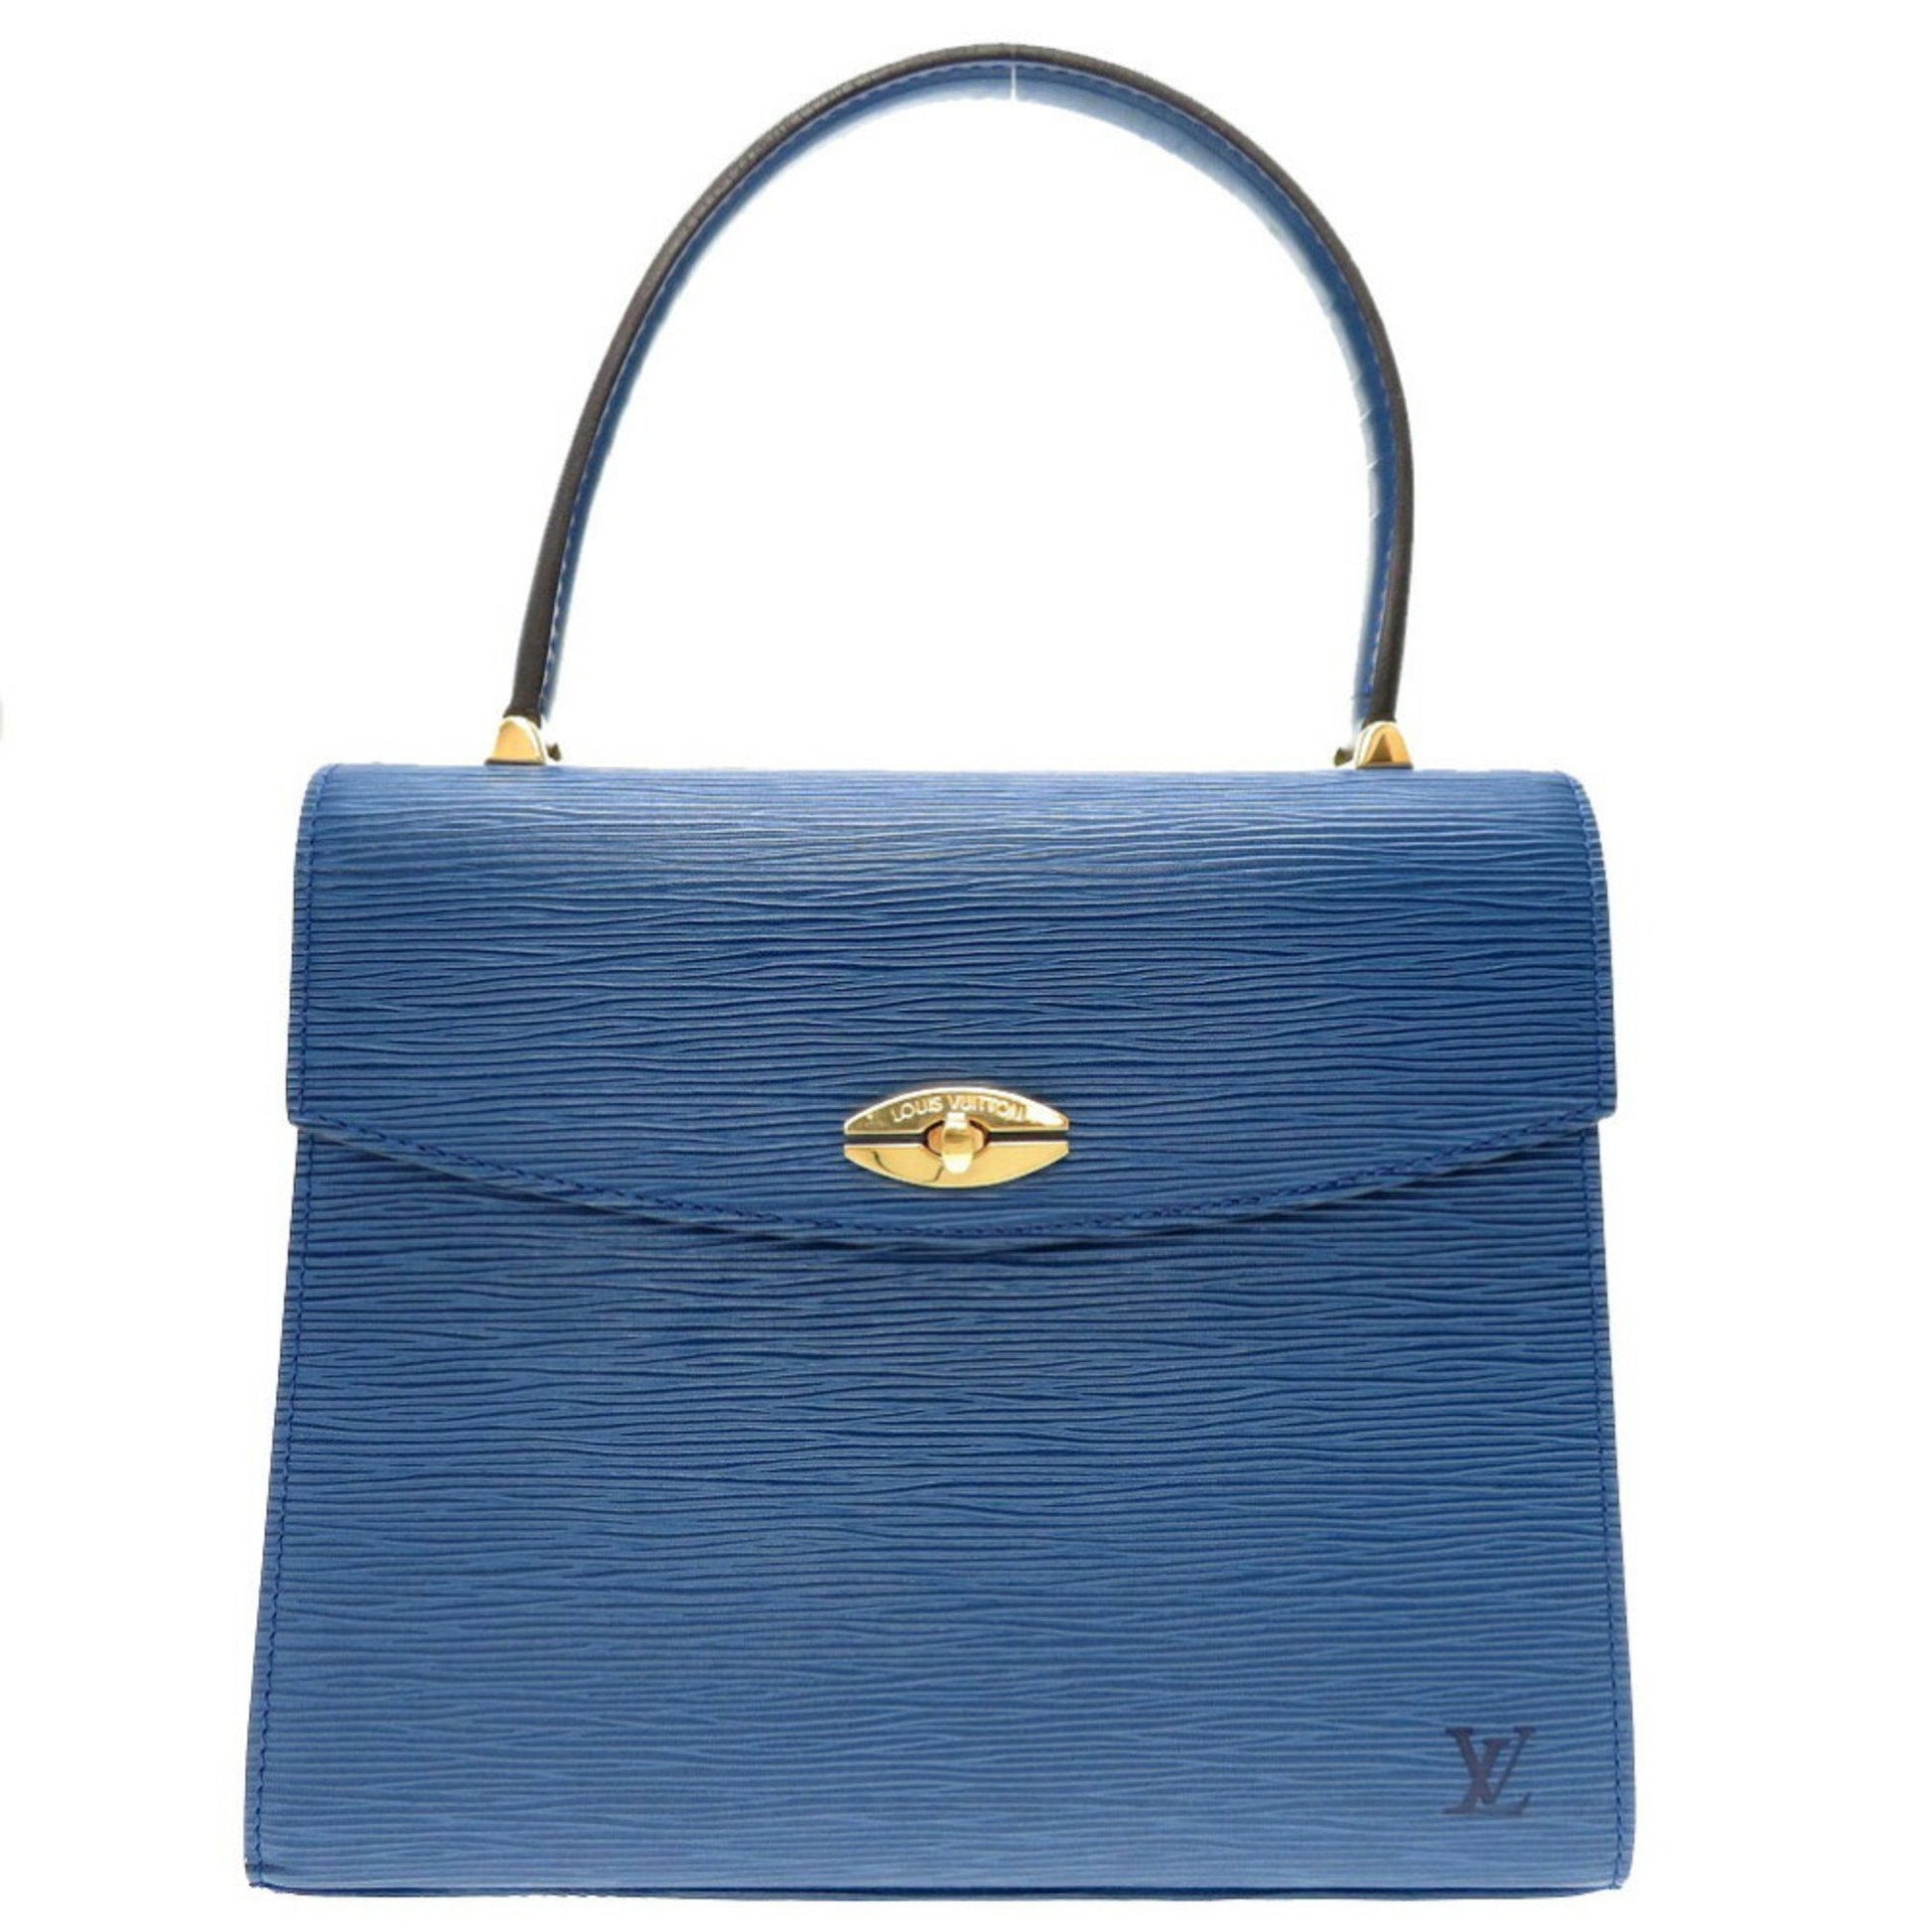 Louis Vuitton Epi Malesherbes Blue M52375 Handbag